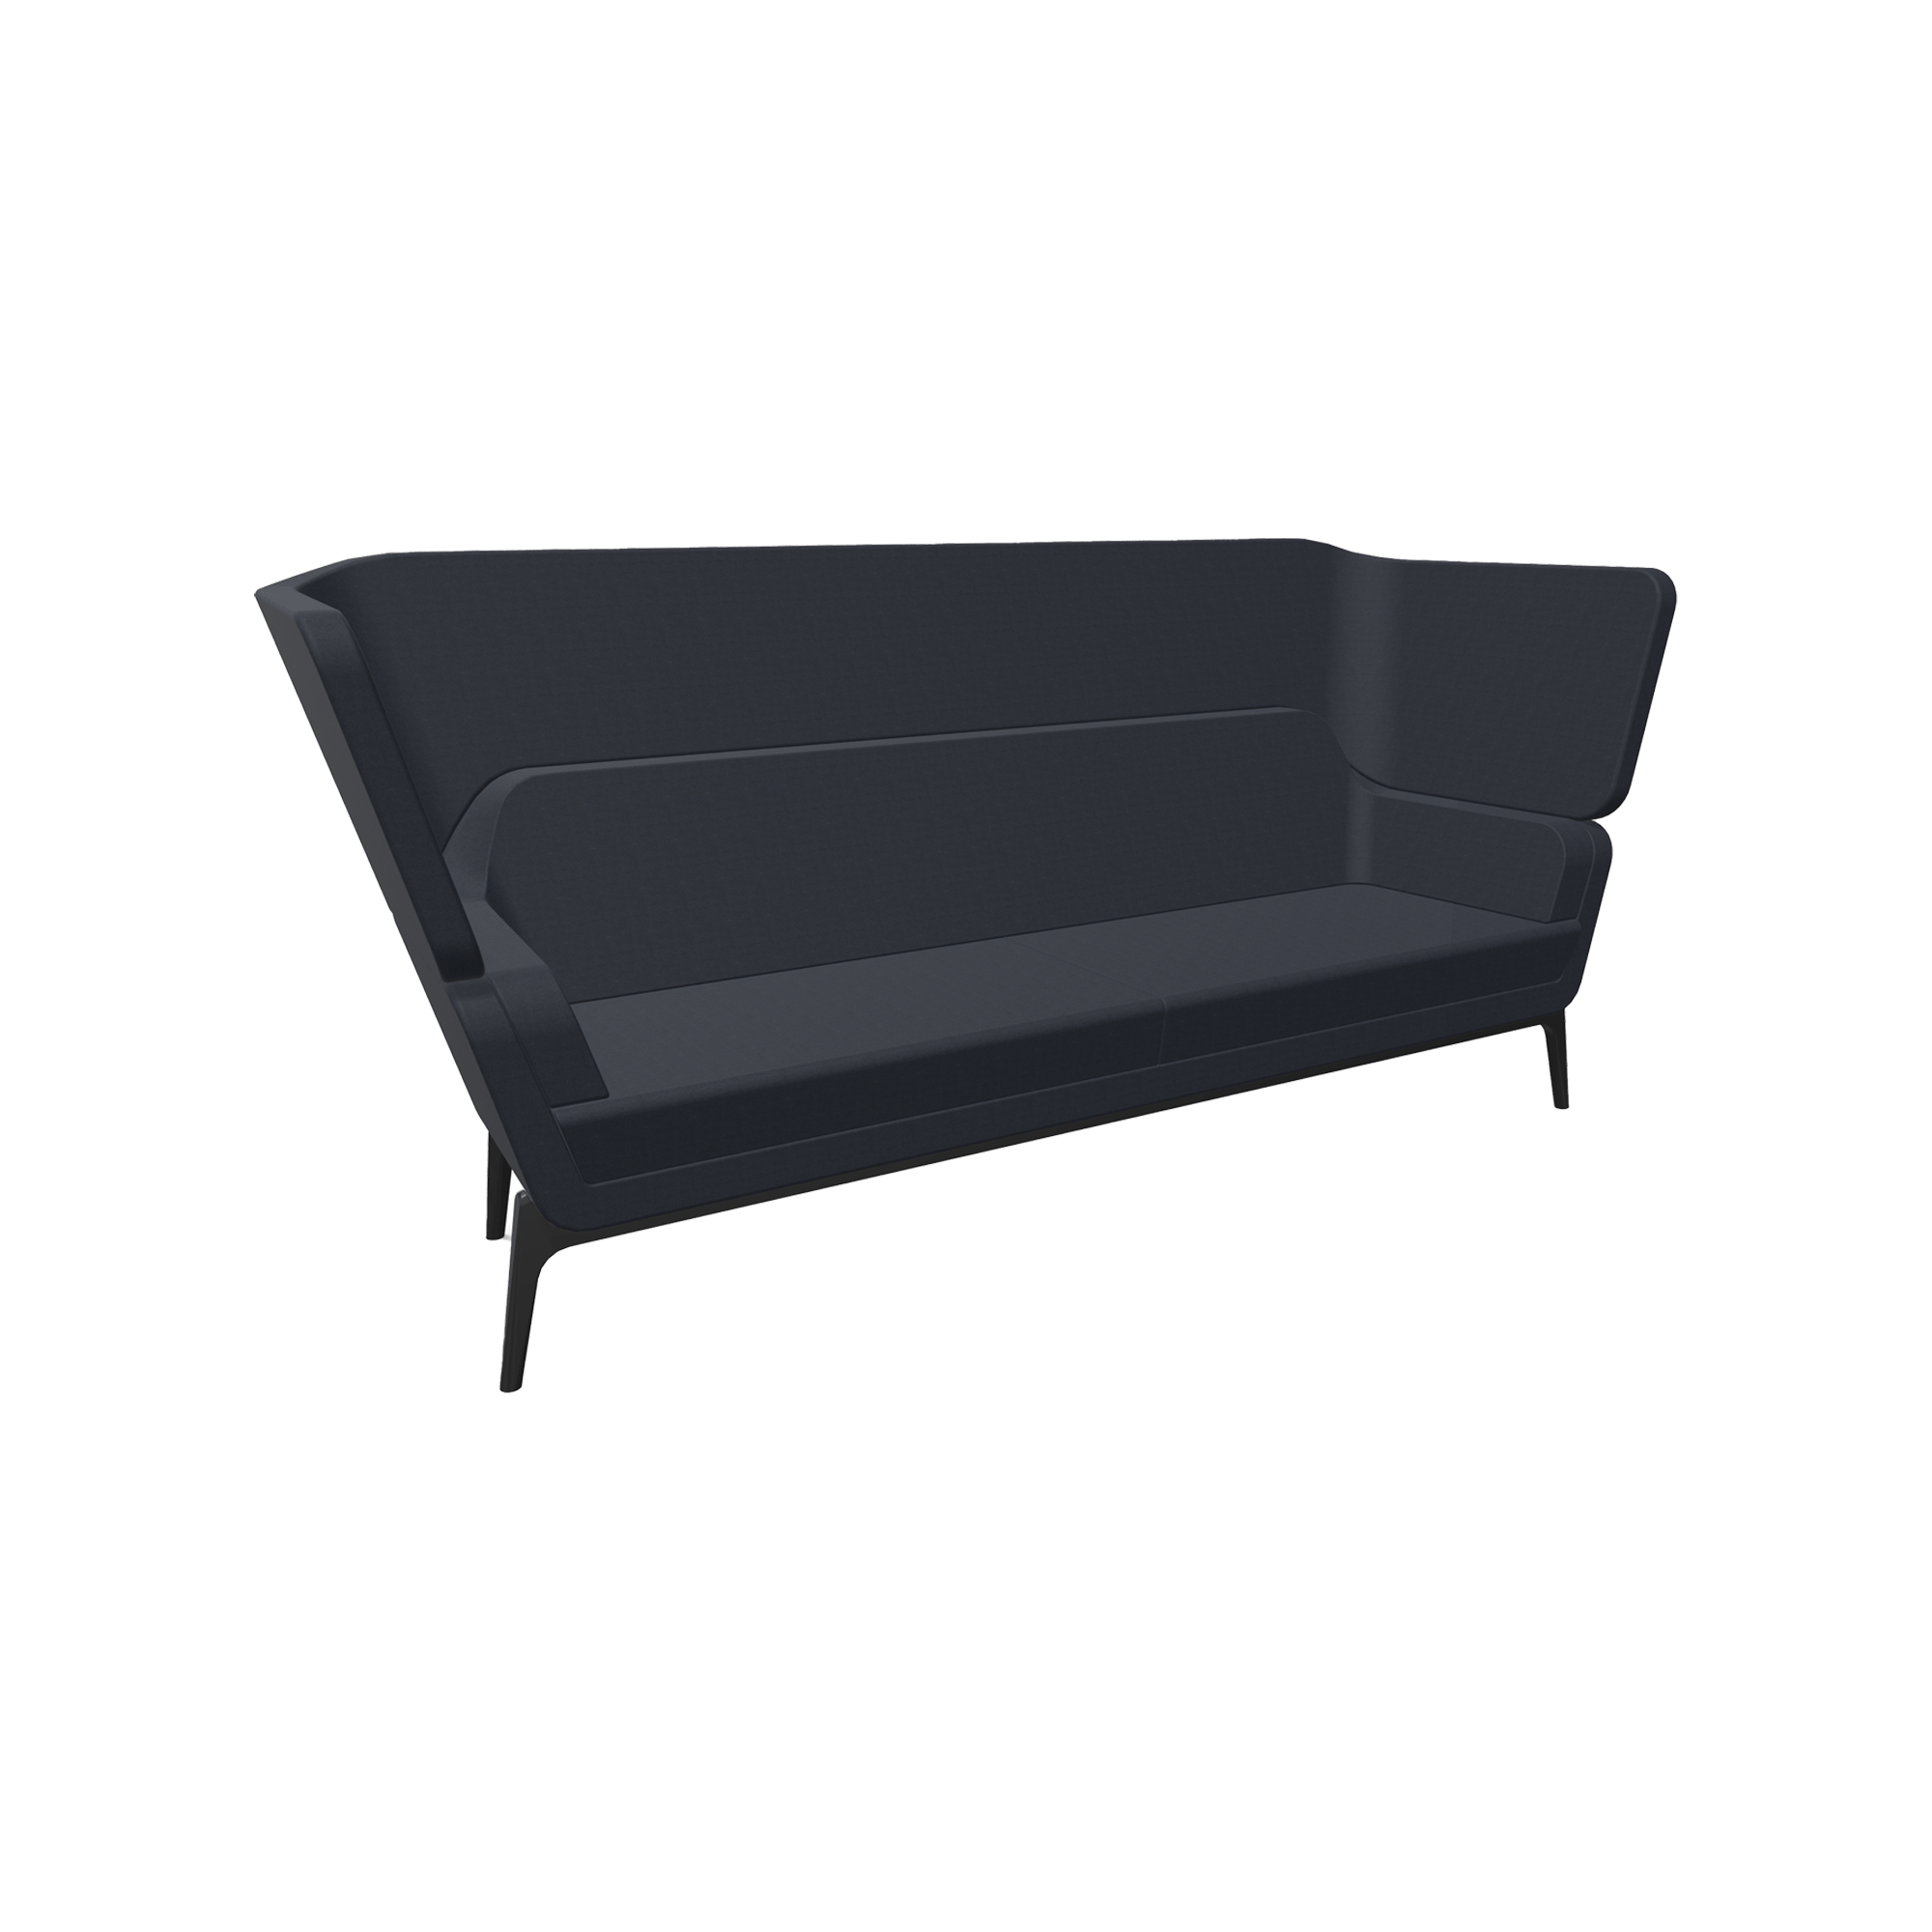 A black sofa on a white background.